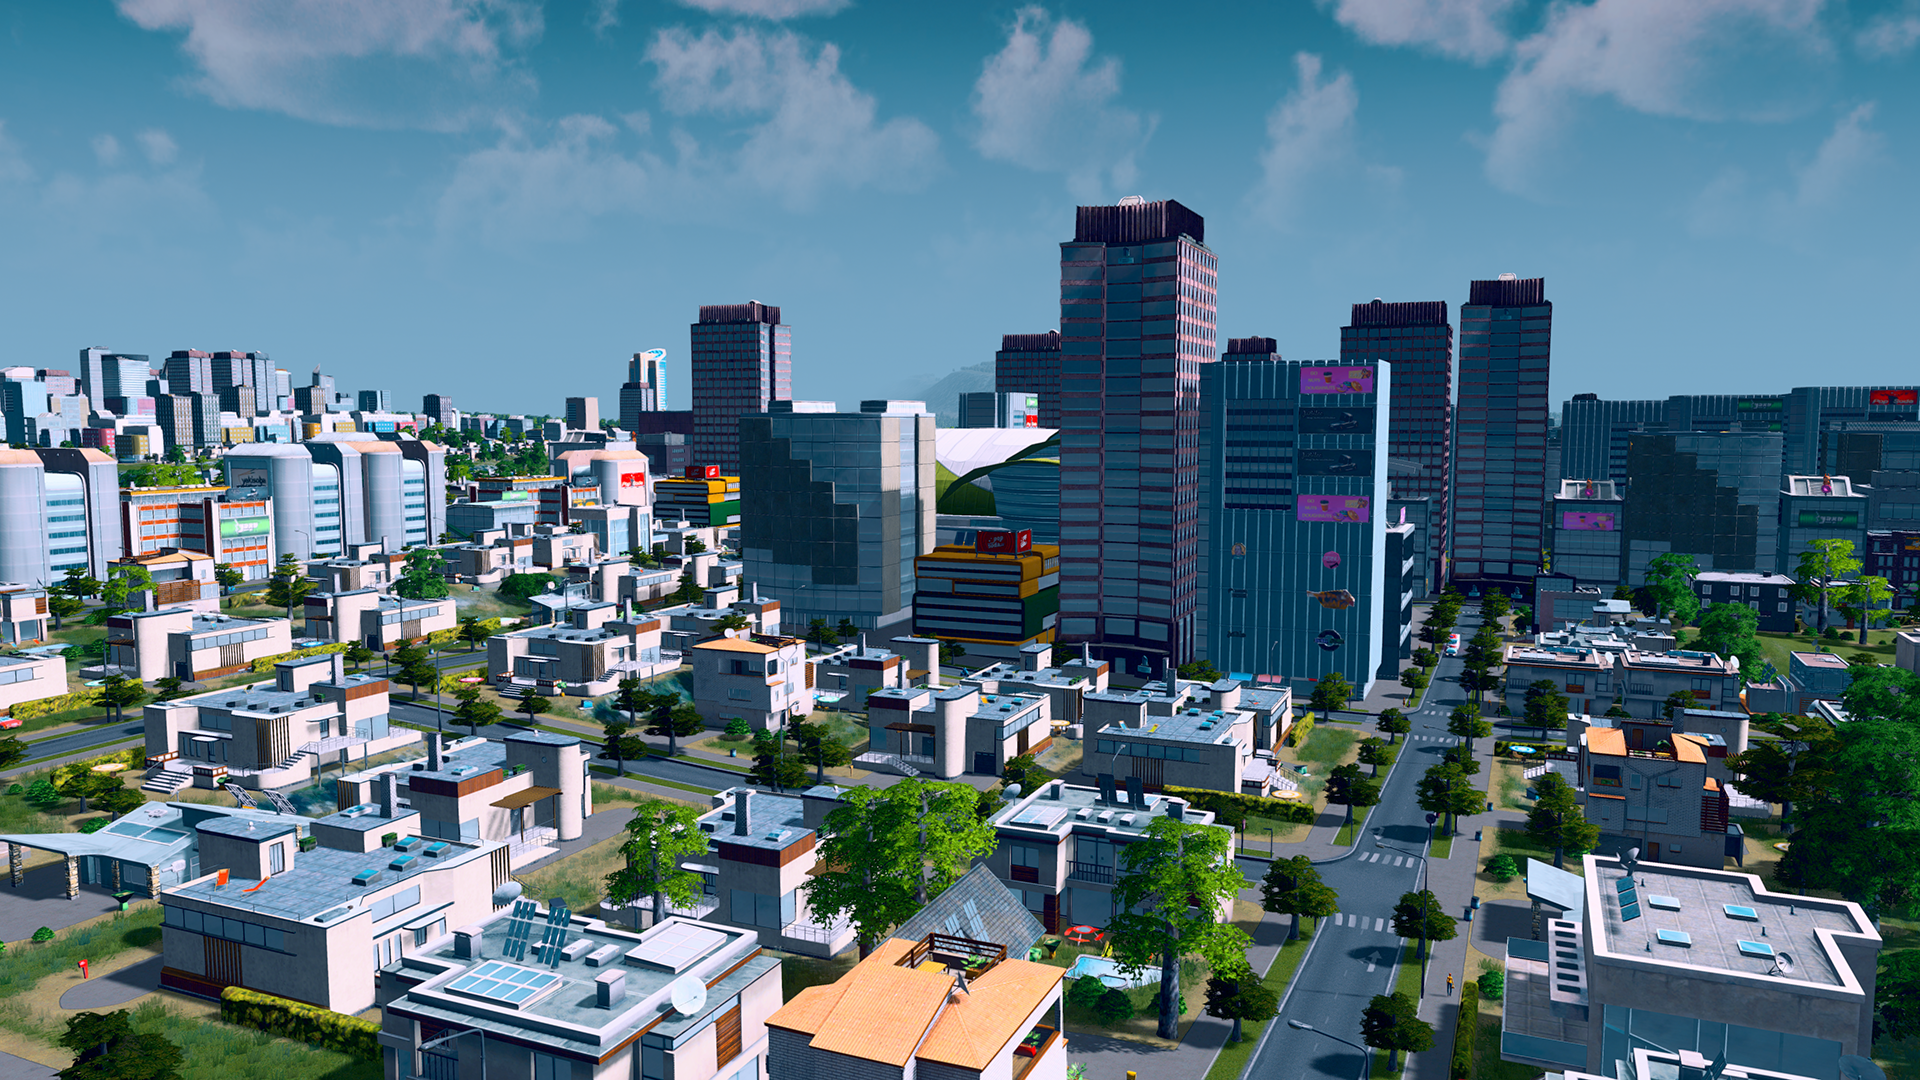 Cities: Skylines 2 chegou ao Game Pass